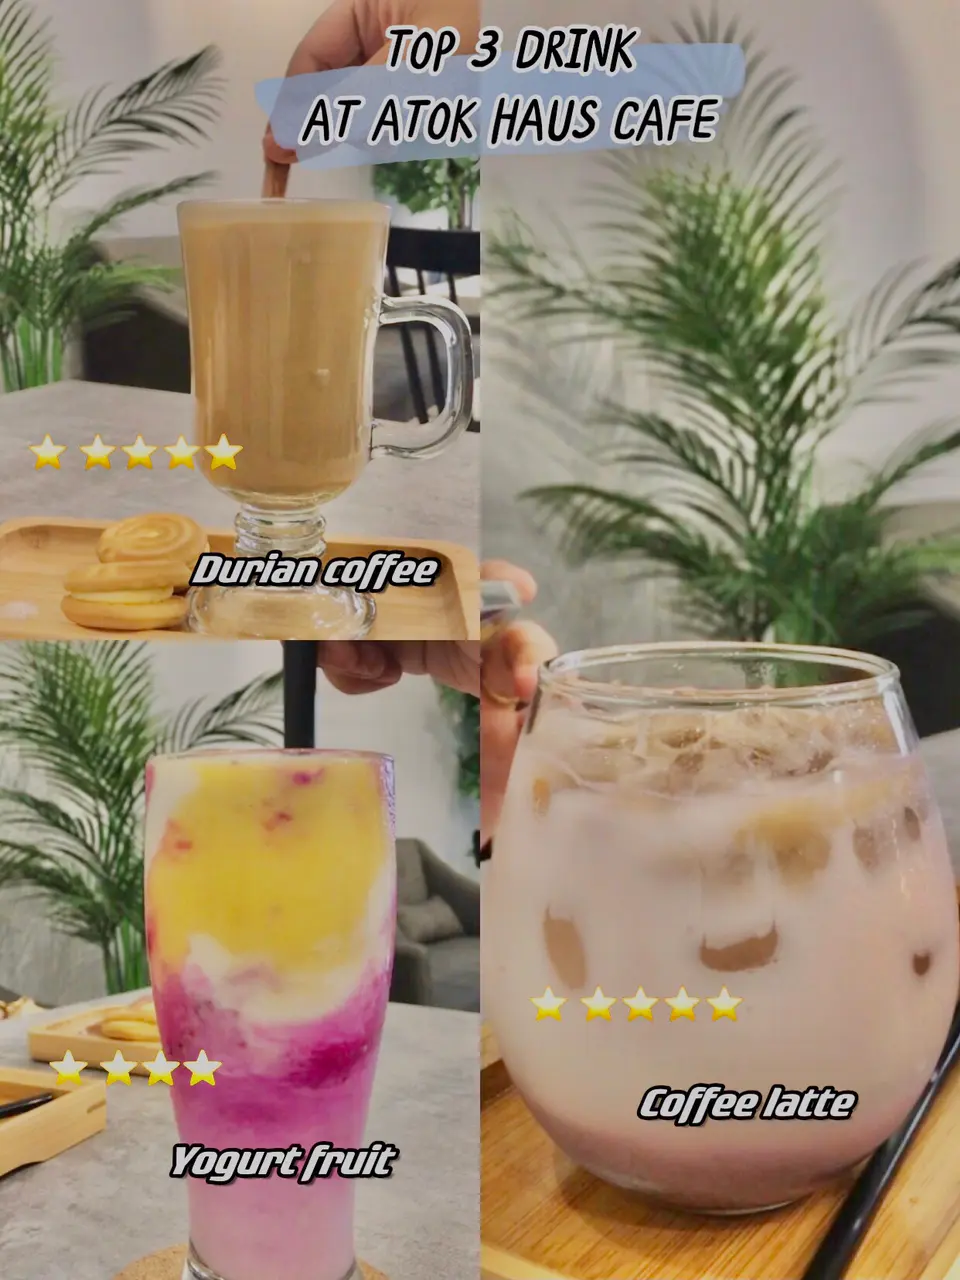 Kuala sungai baru ngeteh cafe BecHoi's: November